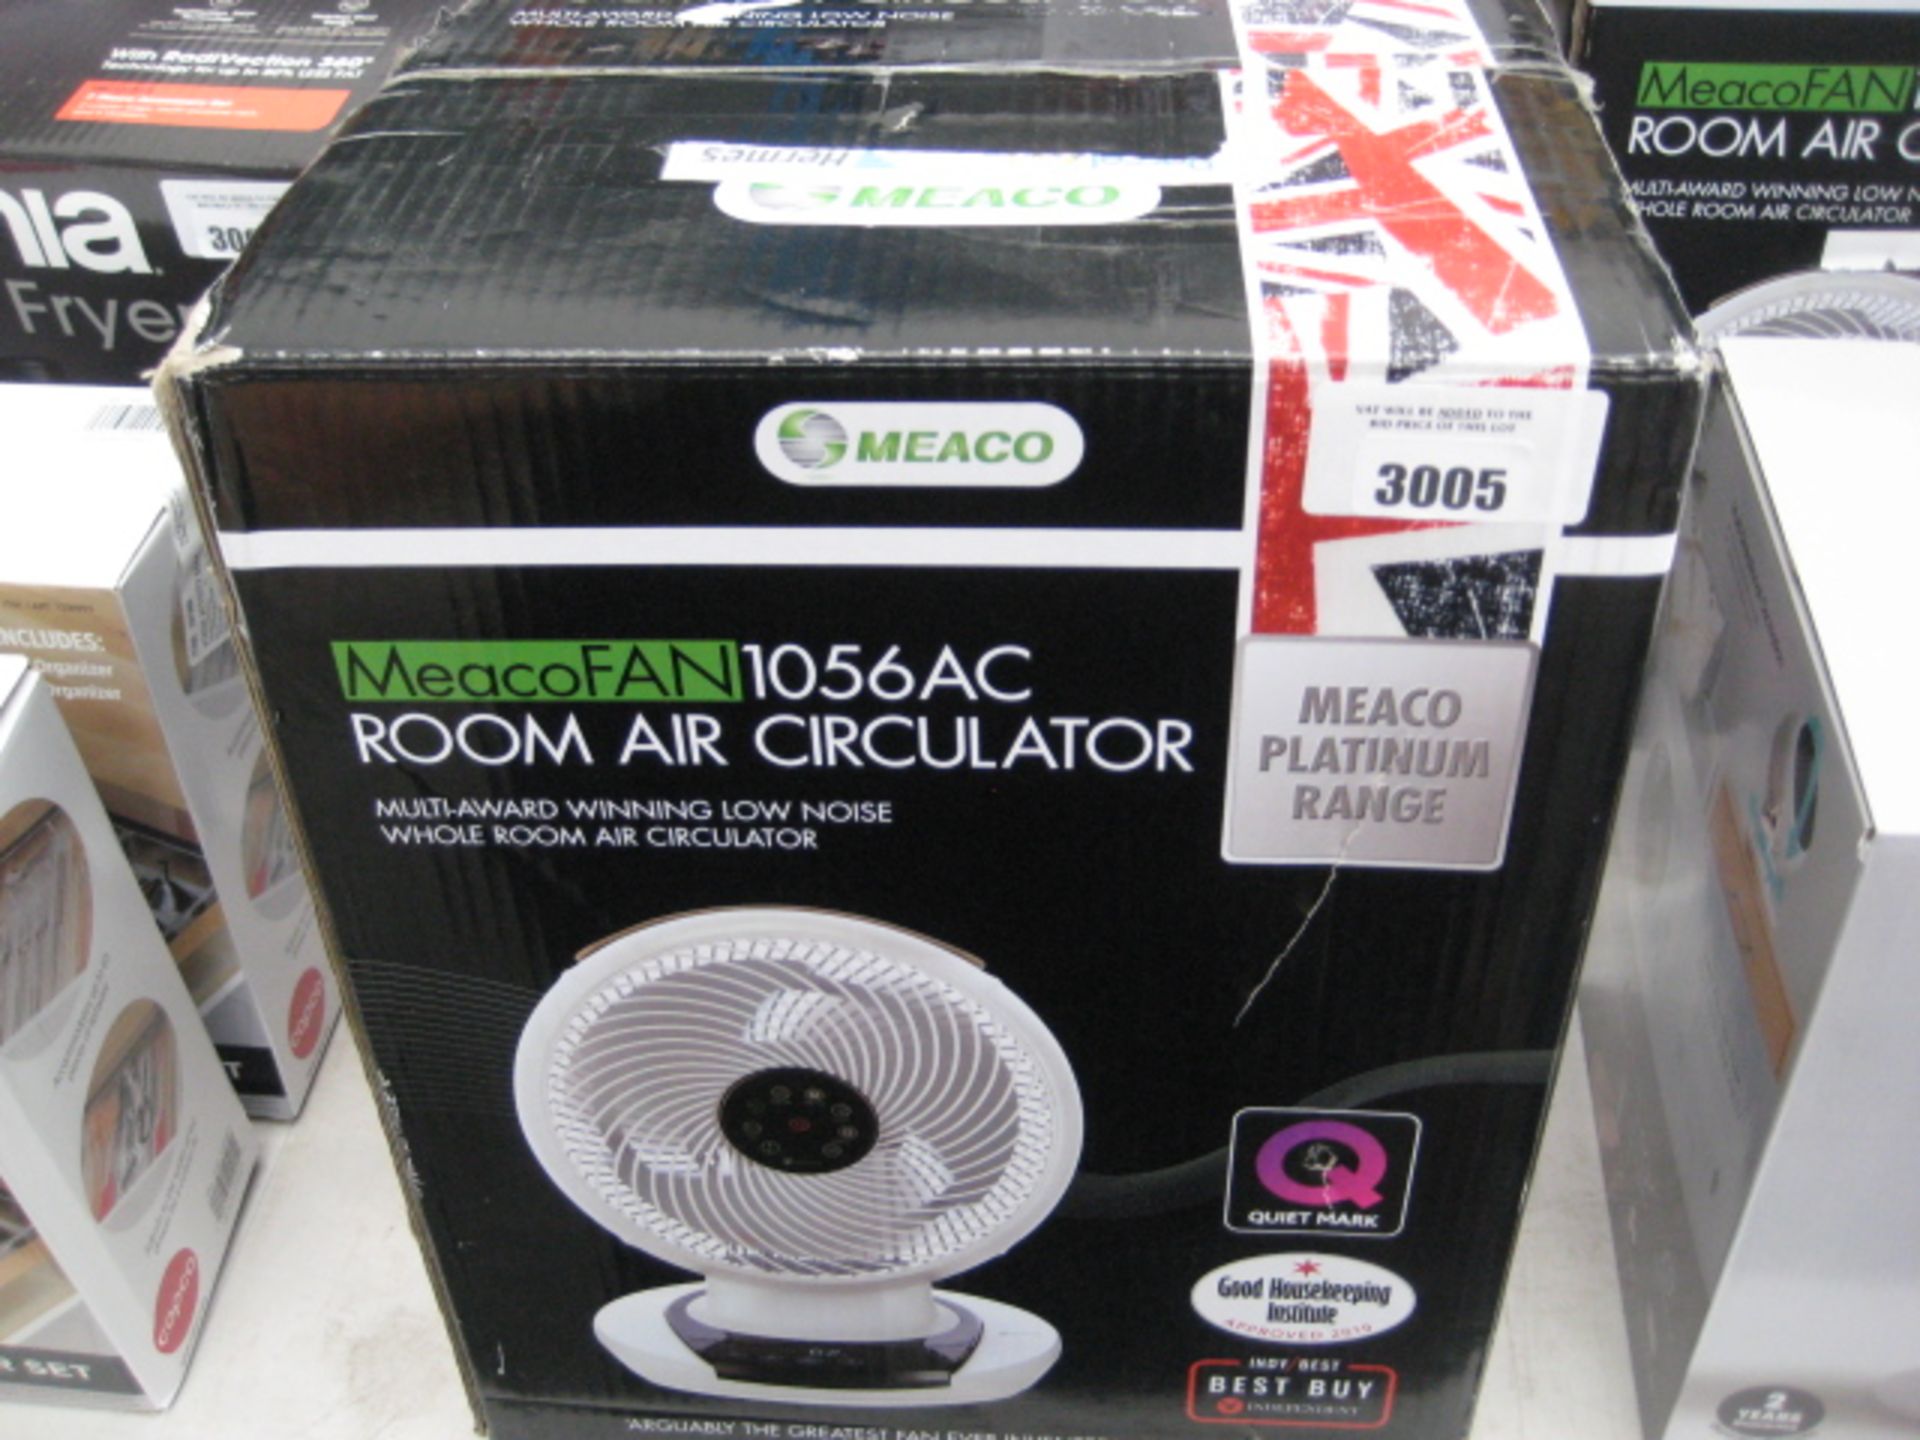 Boxed Meaco room air circulator fan